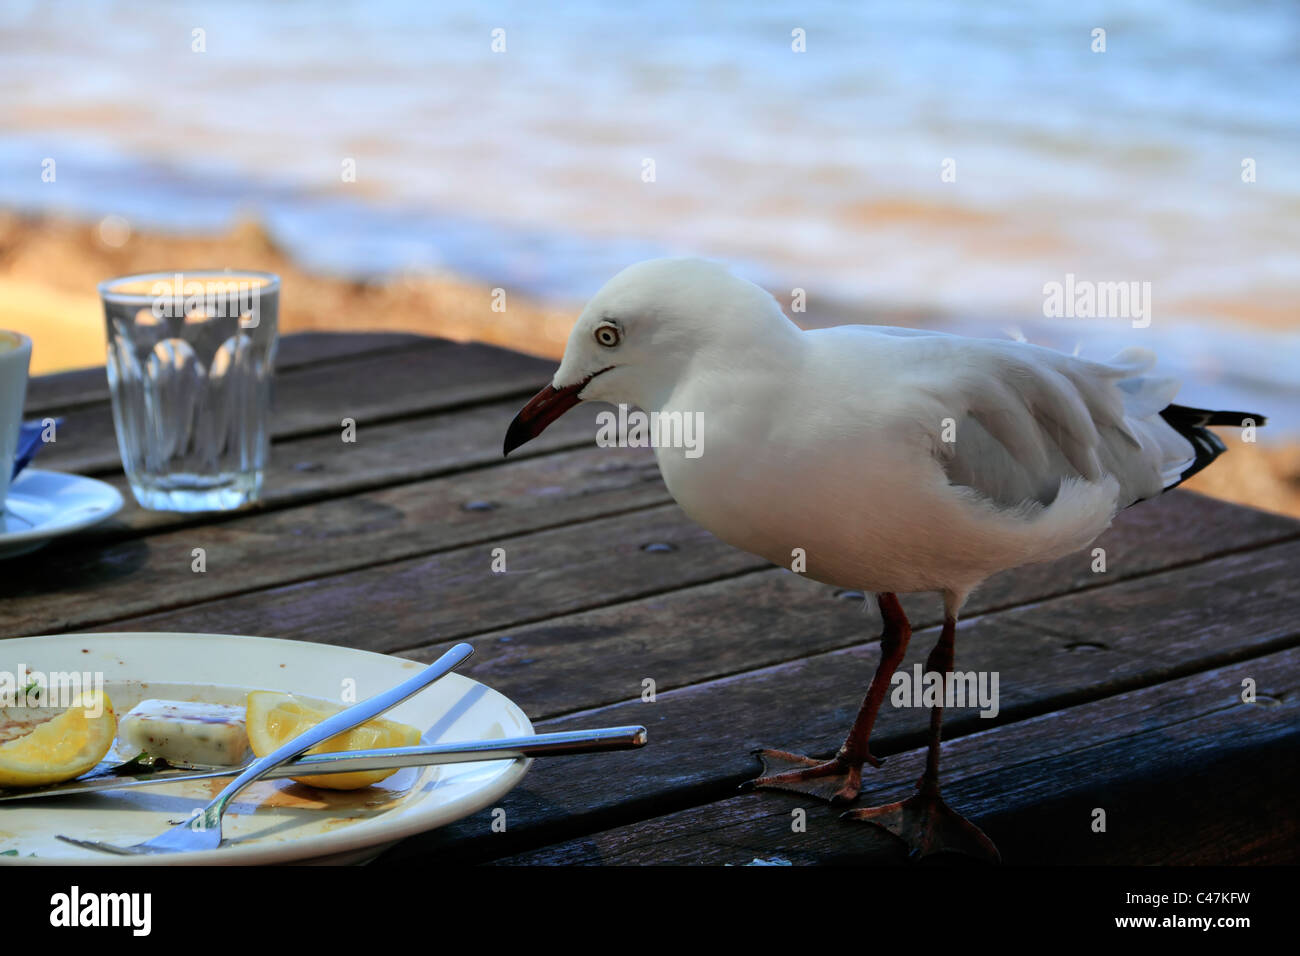 Seagull ( Croicocephalus novaehollandiae ) on table with food scraps, Perth Western Australia Stock Photo